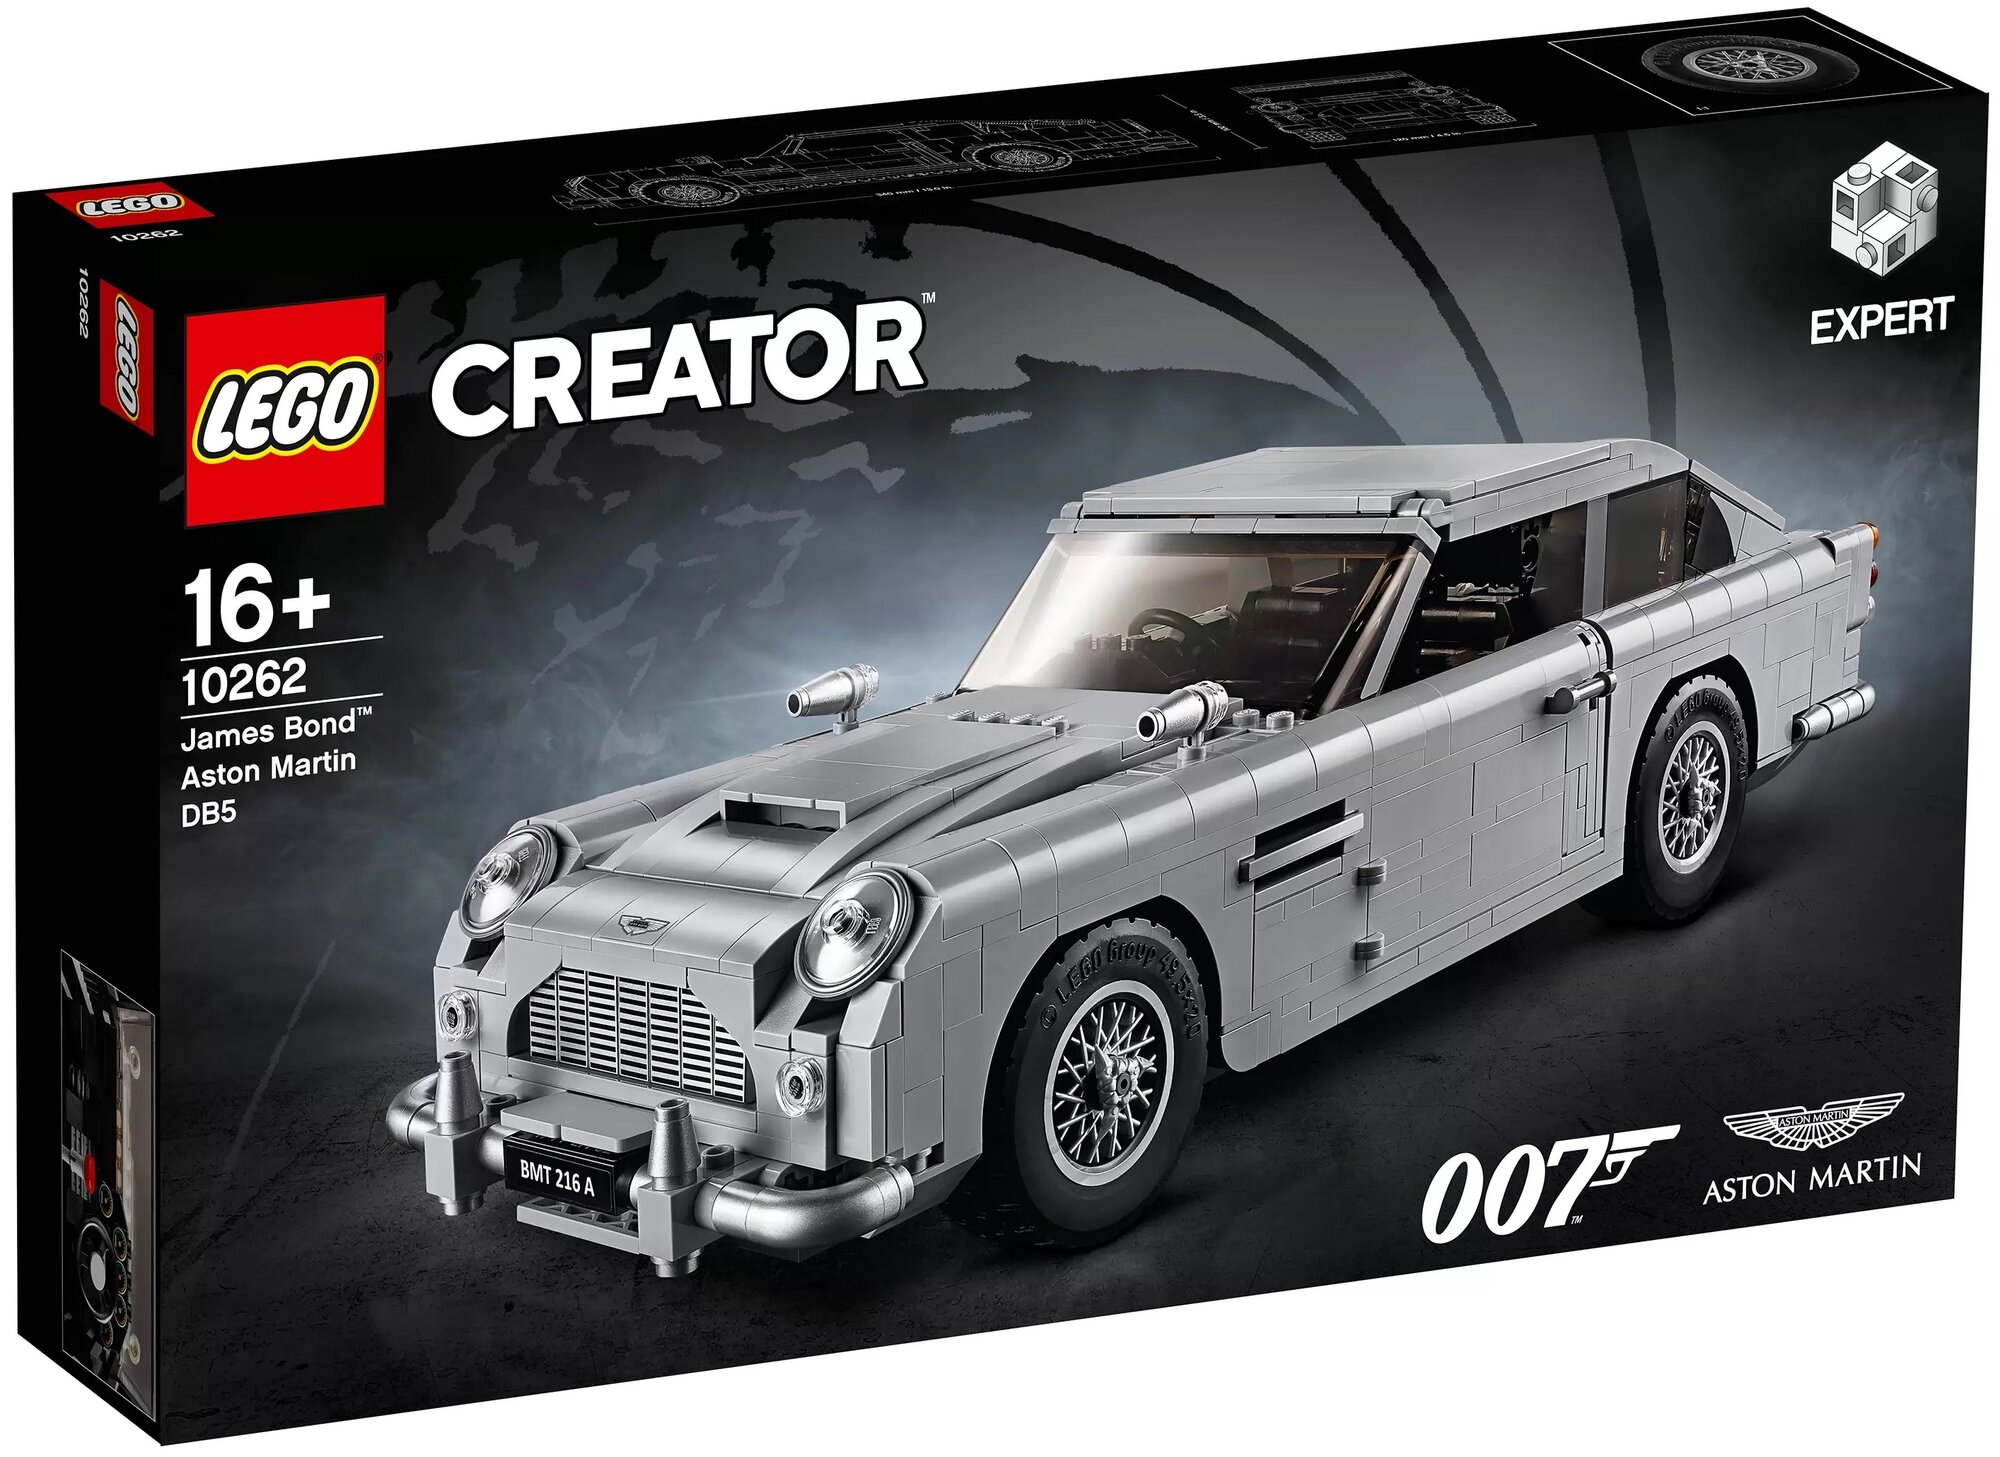 Конструктор LEGO Creator 10262 Джеймс Бонд: Aston Martin DB5, 1295 дет.